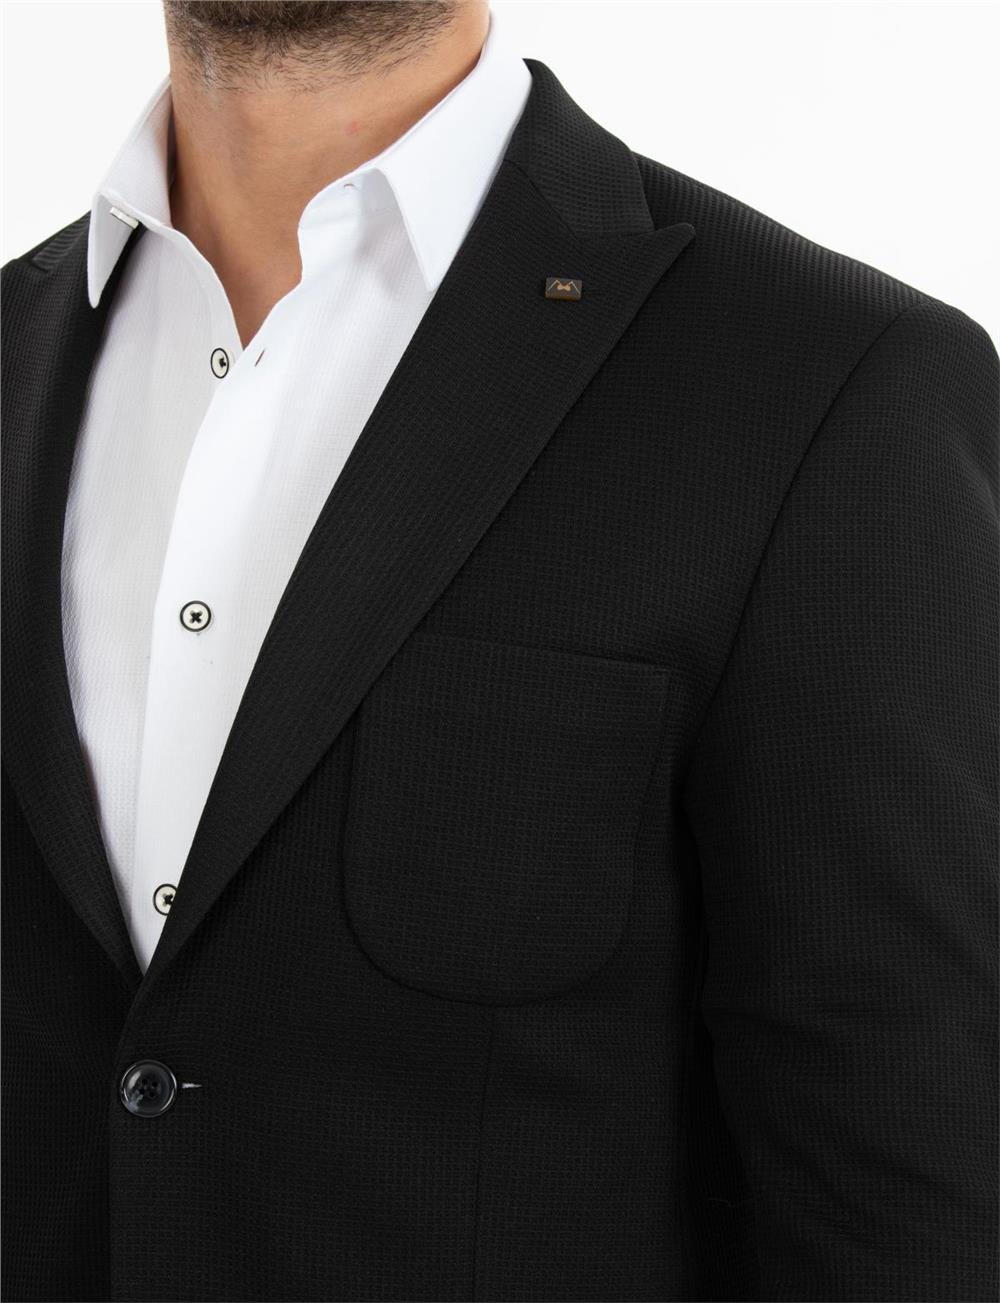 Erkek takım elbise ceket toptan Siyah renk | Toptan Giyim